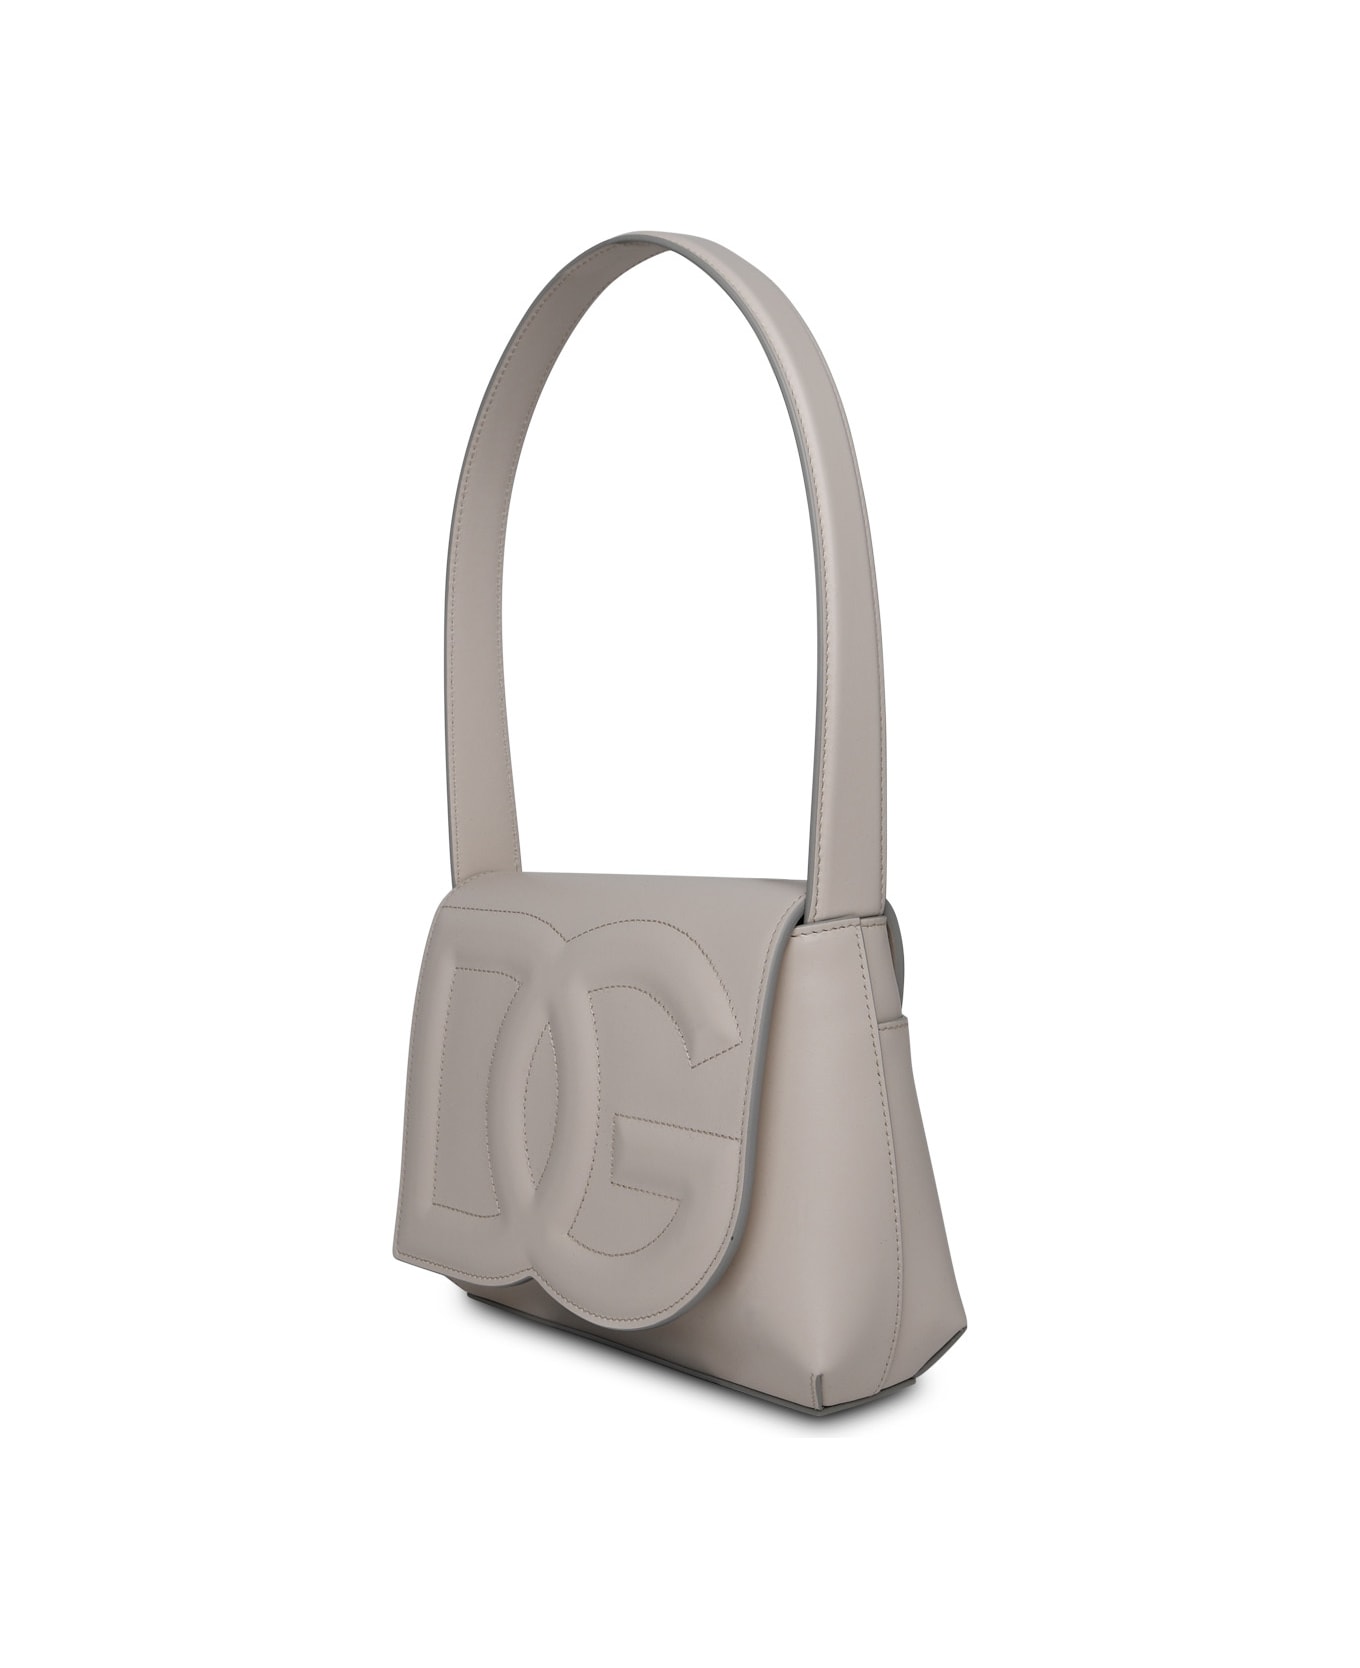 Dolce & Gabbana Dg Logo Shoulder Bag In Ivory Calf Leather - Avorio